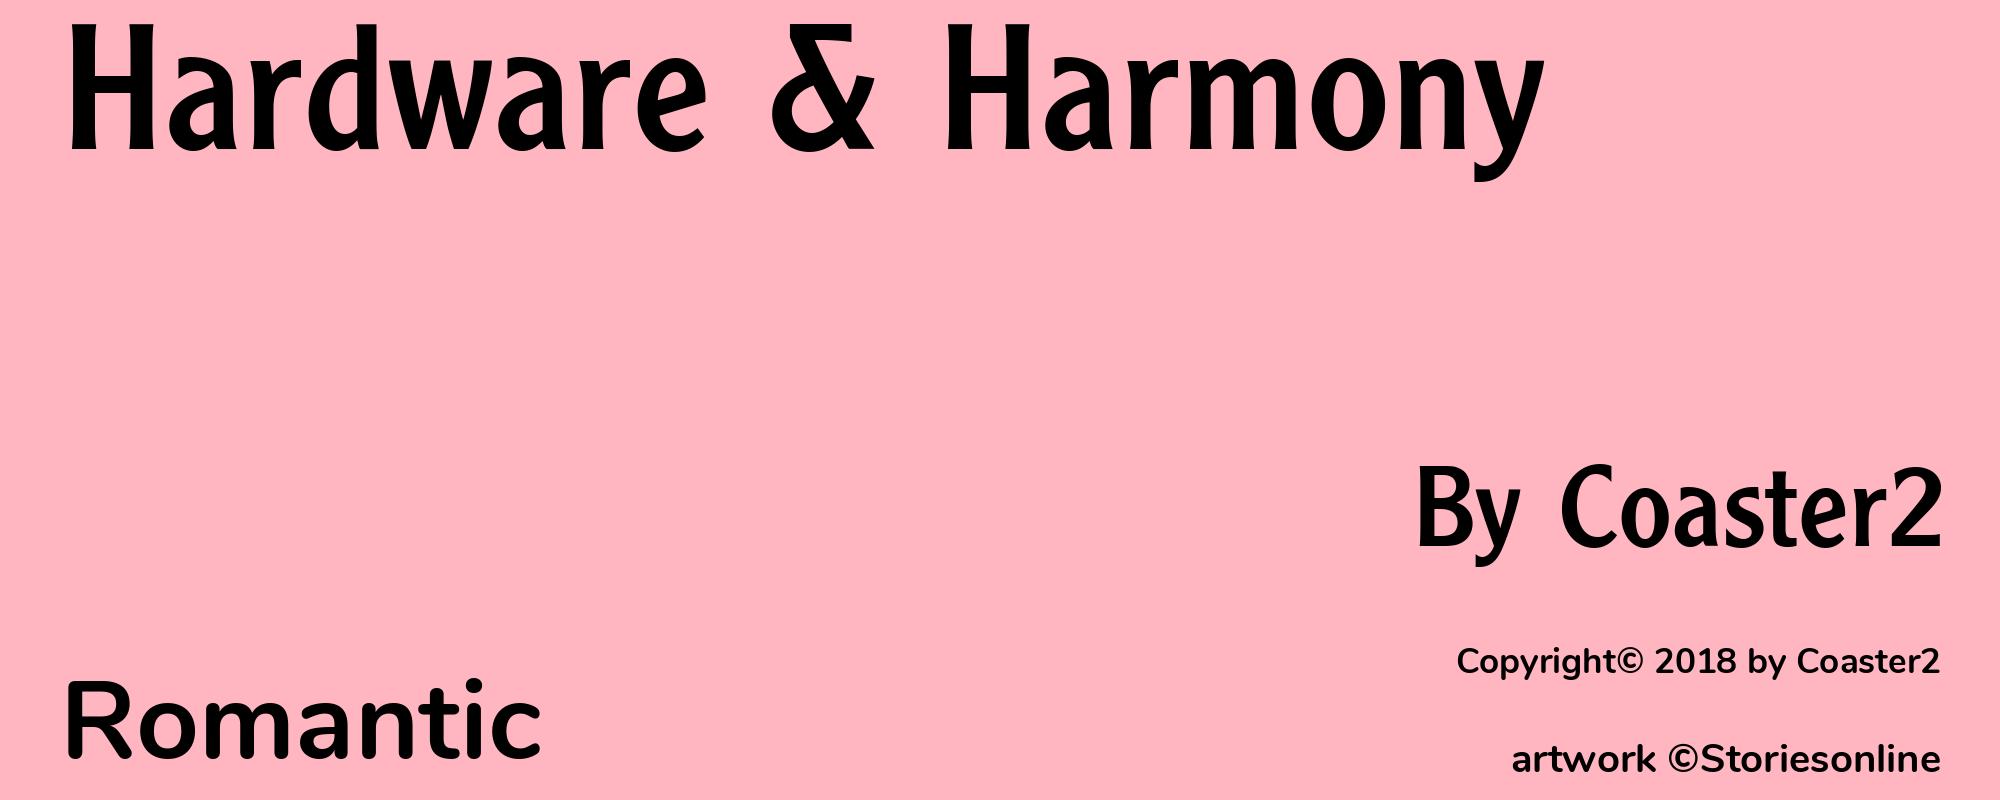 Hardware & Harmony - Cover